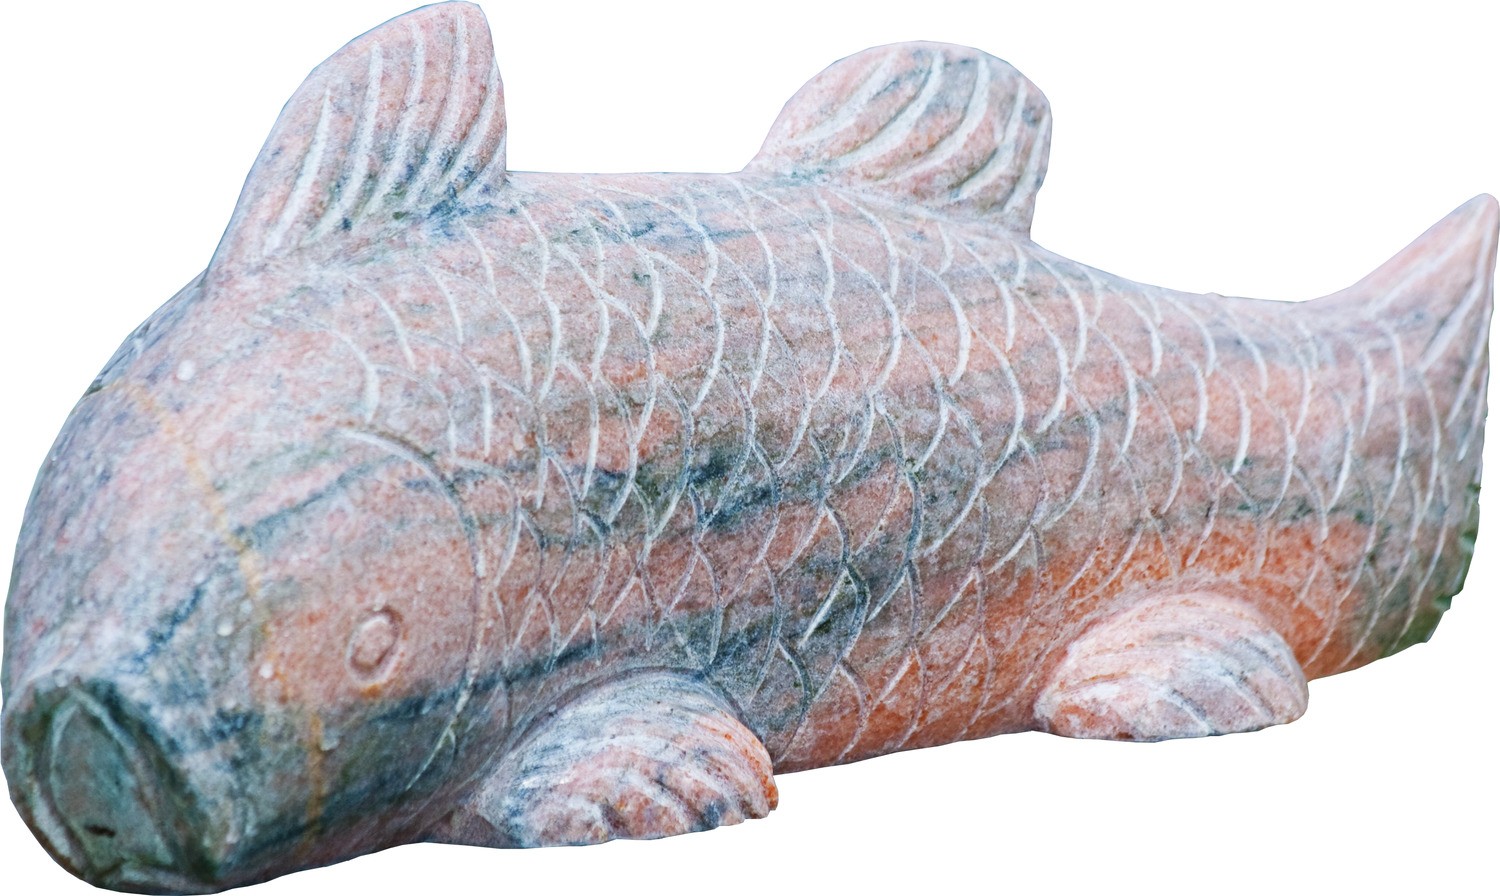 Fisch "Koi", Länge: ca. 30 cm, Marmor bunt